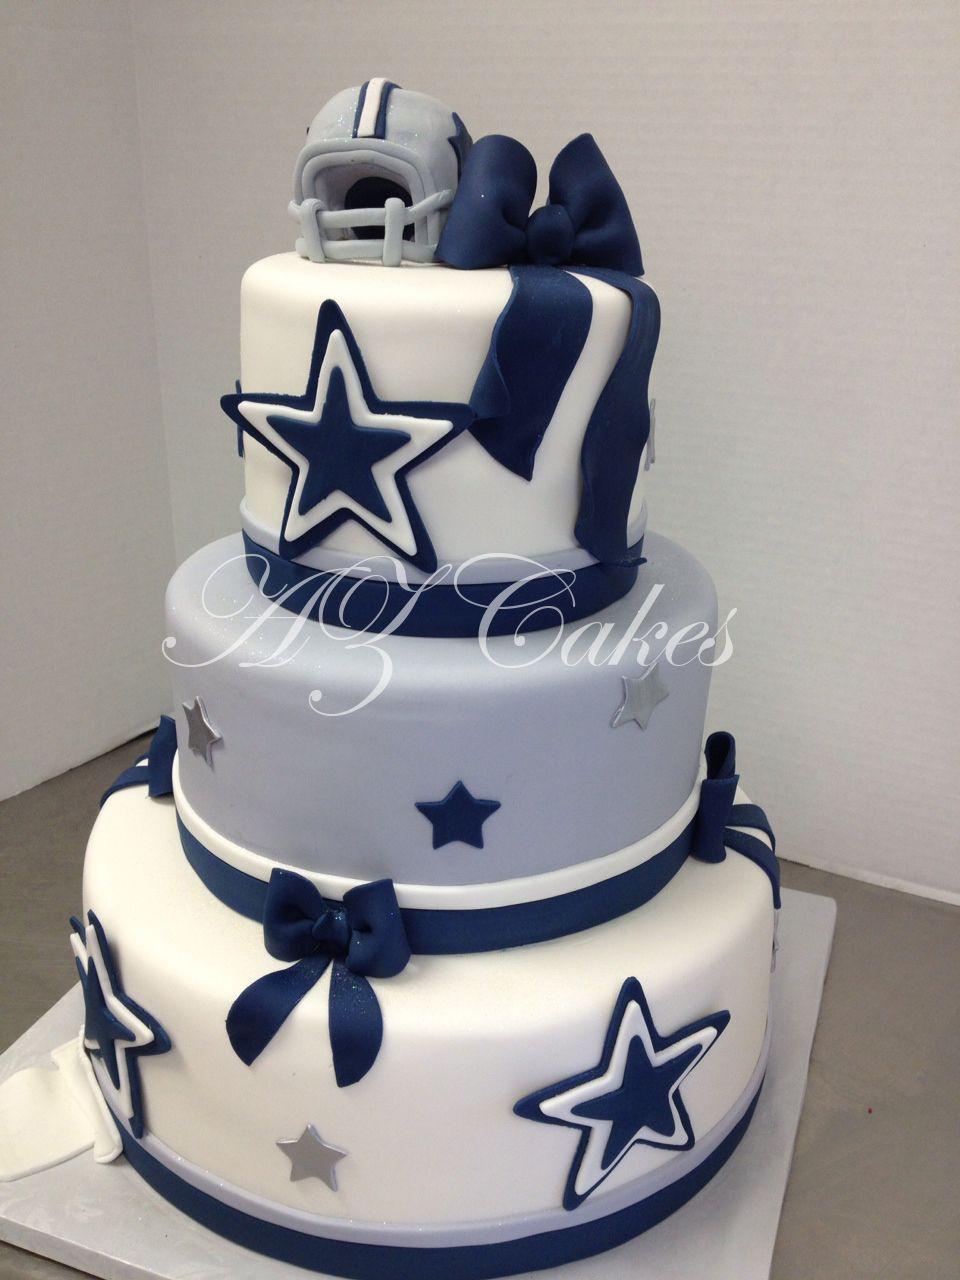 Birthday Cakes Image: Dallas Cowboys Birthday Cakes For Kids Happy